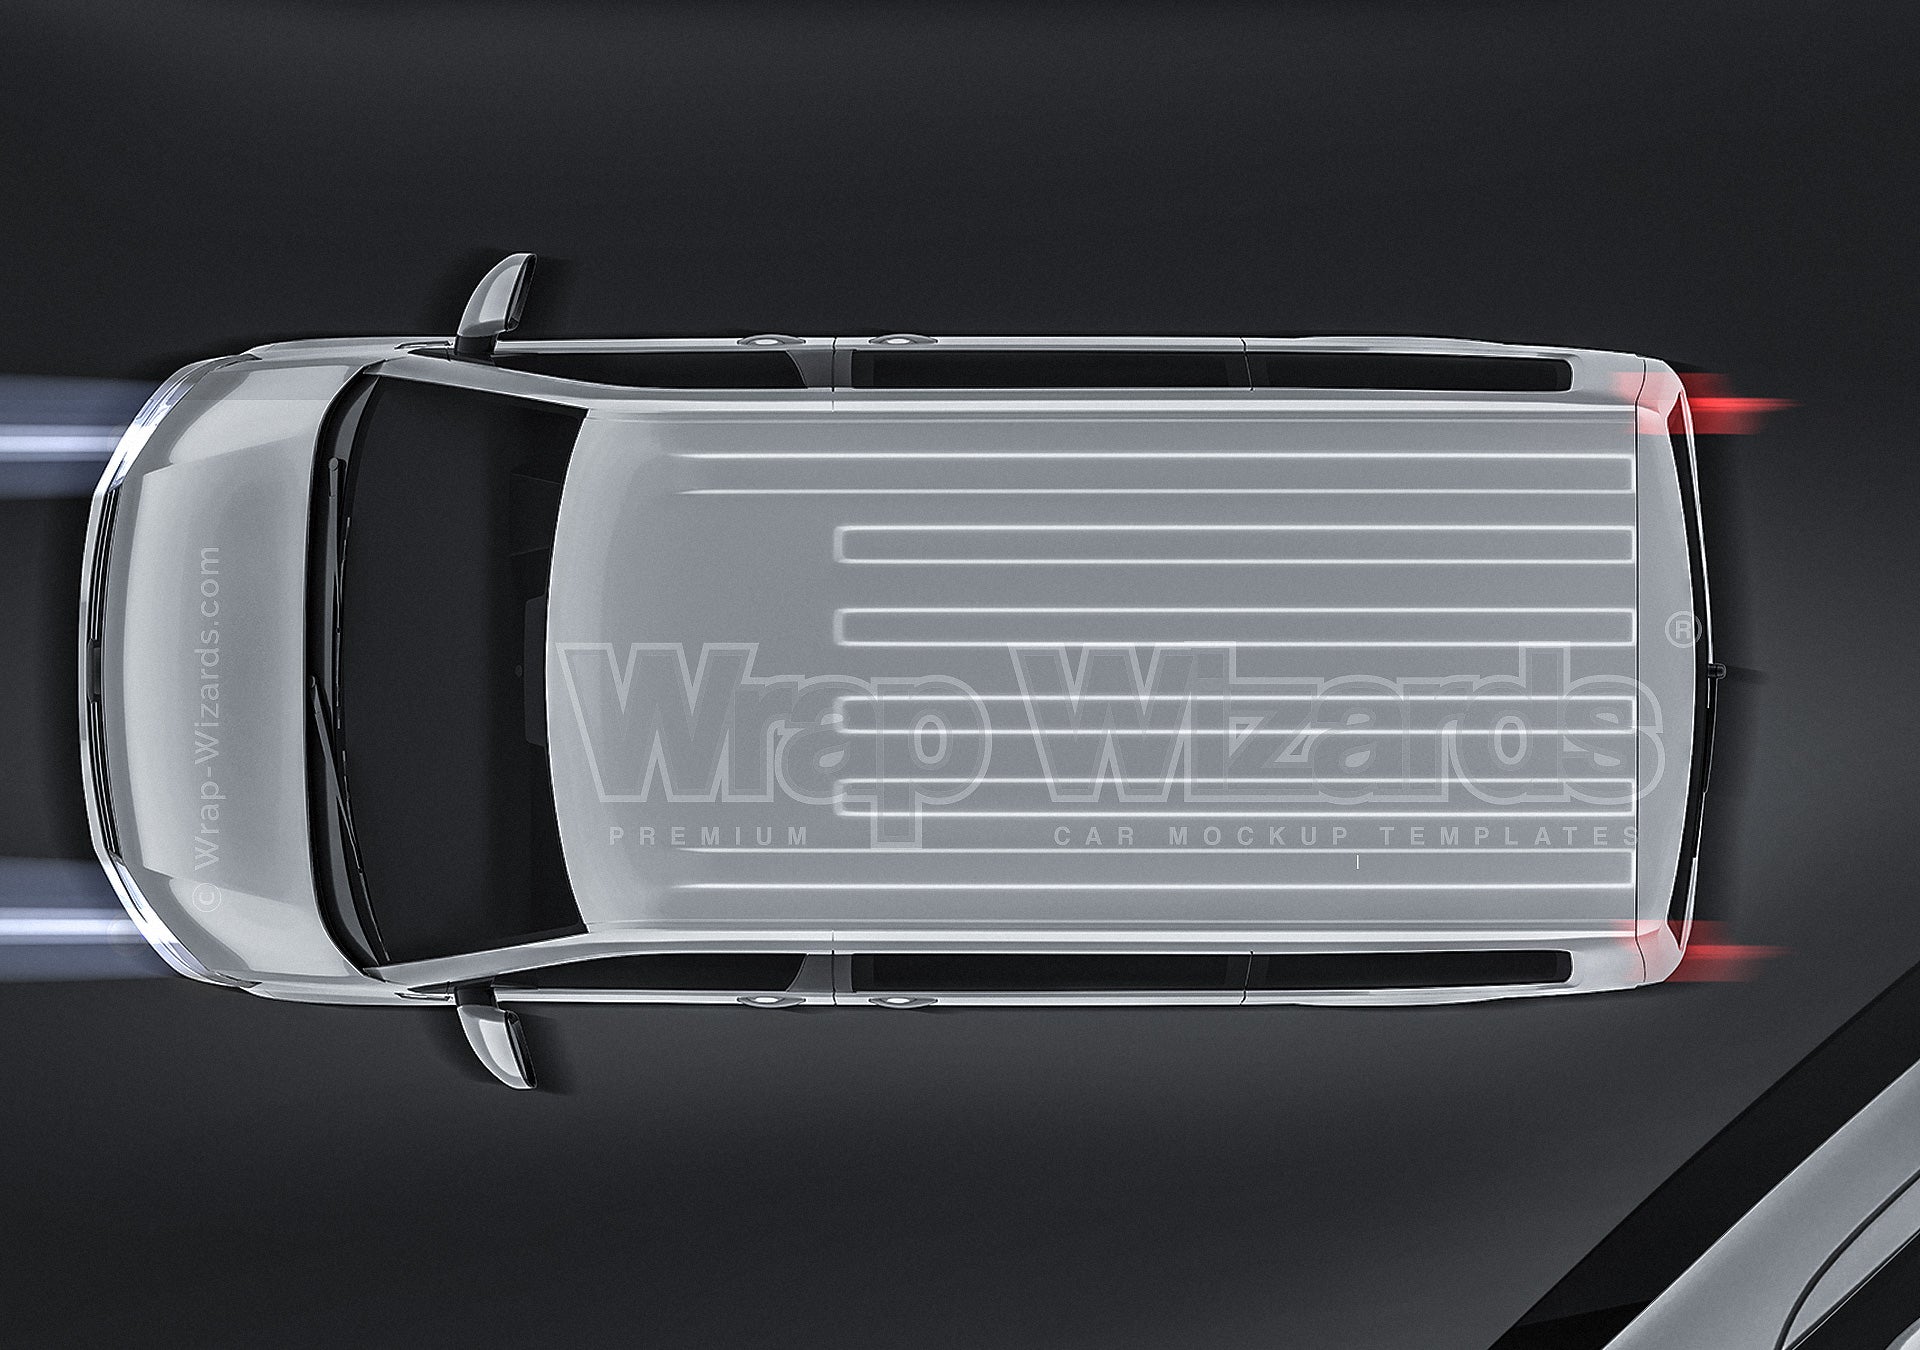 Download VW Transporter all sides Car Mockup Template.psd - Wrap ...